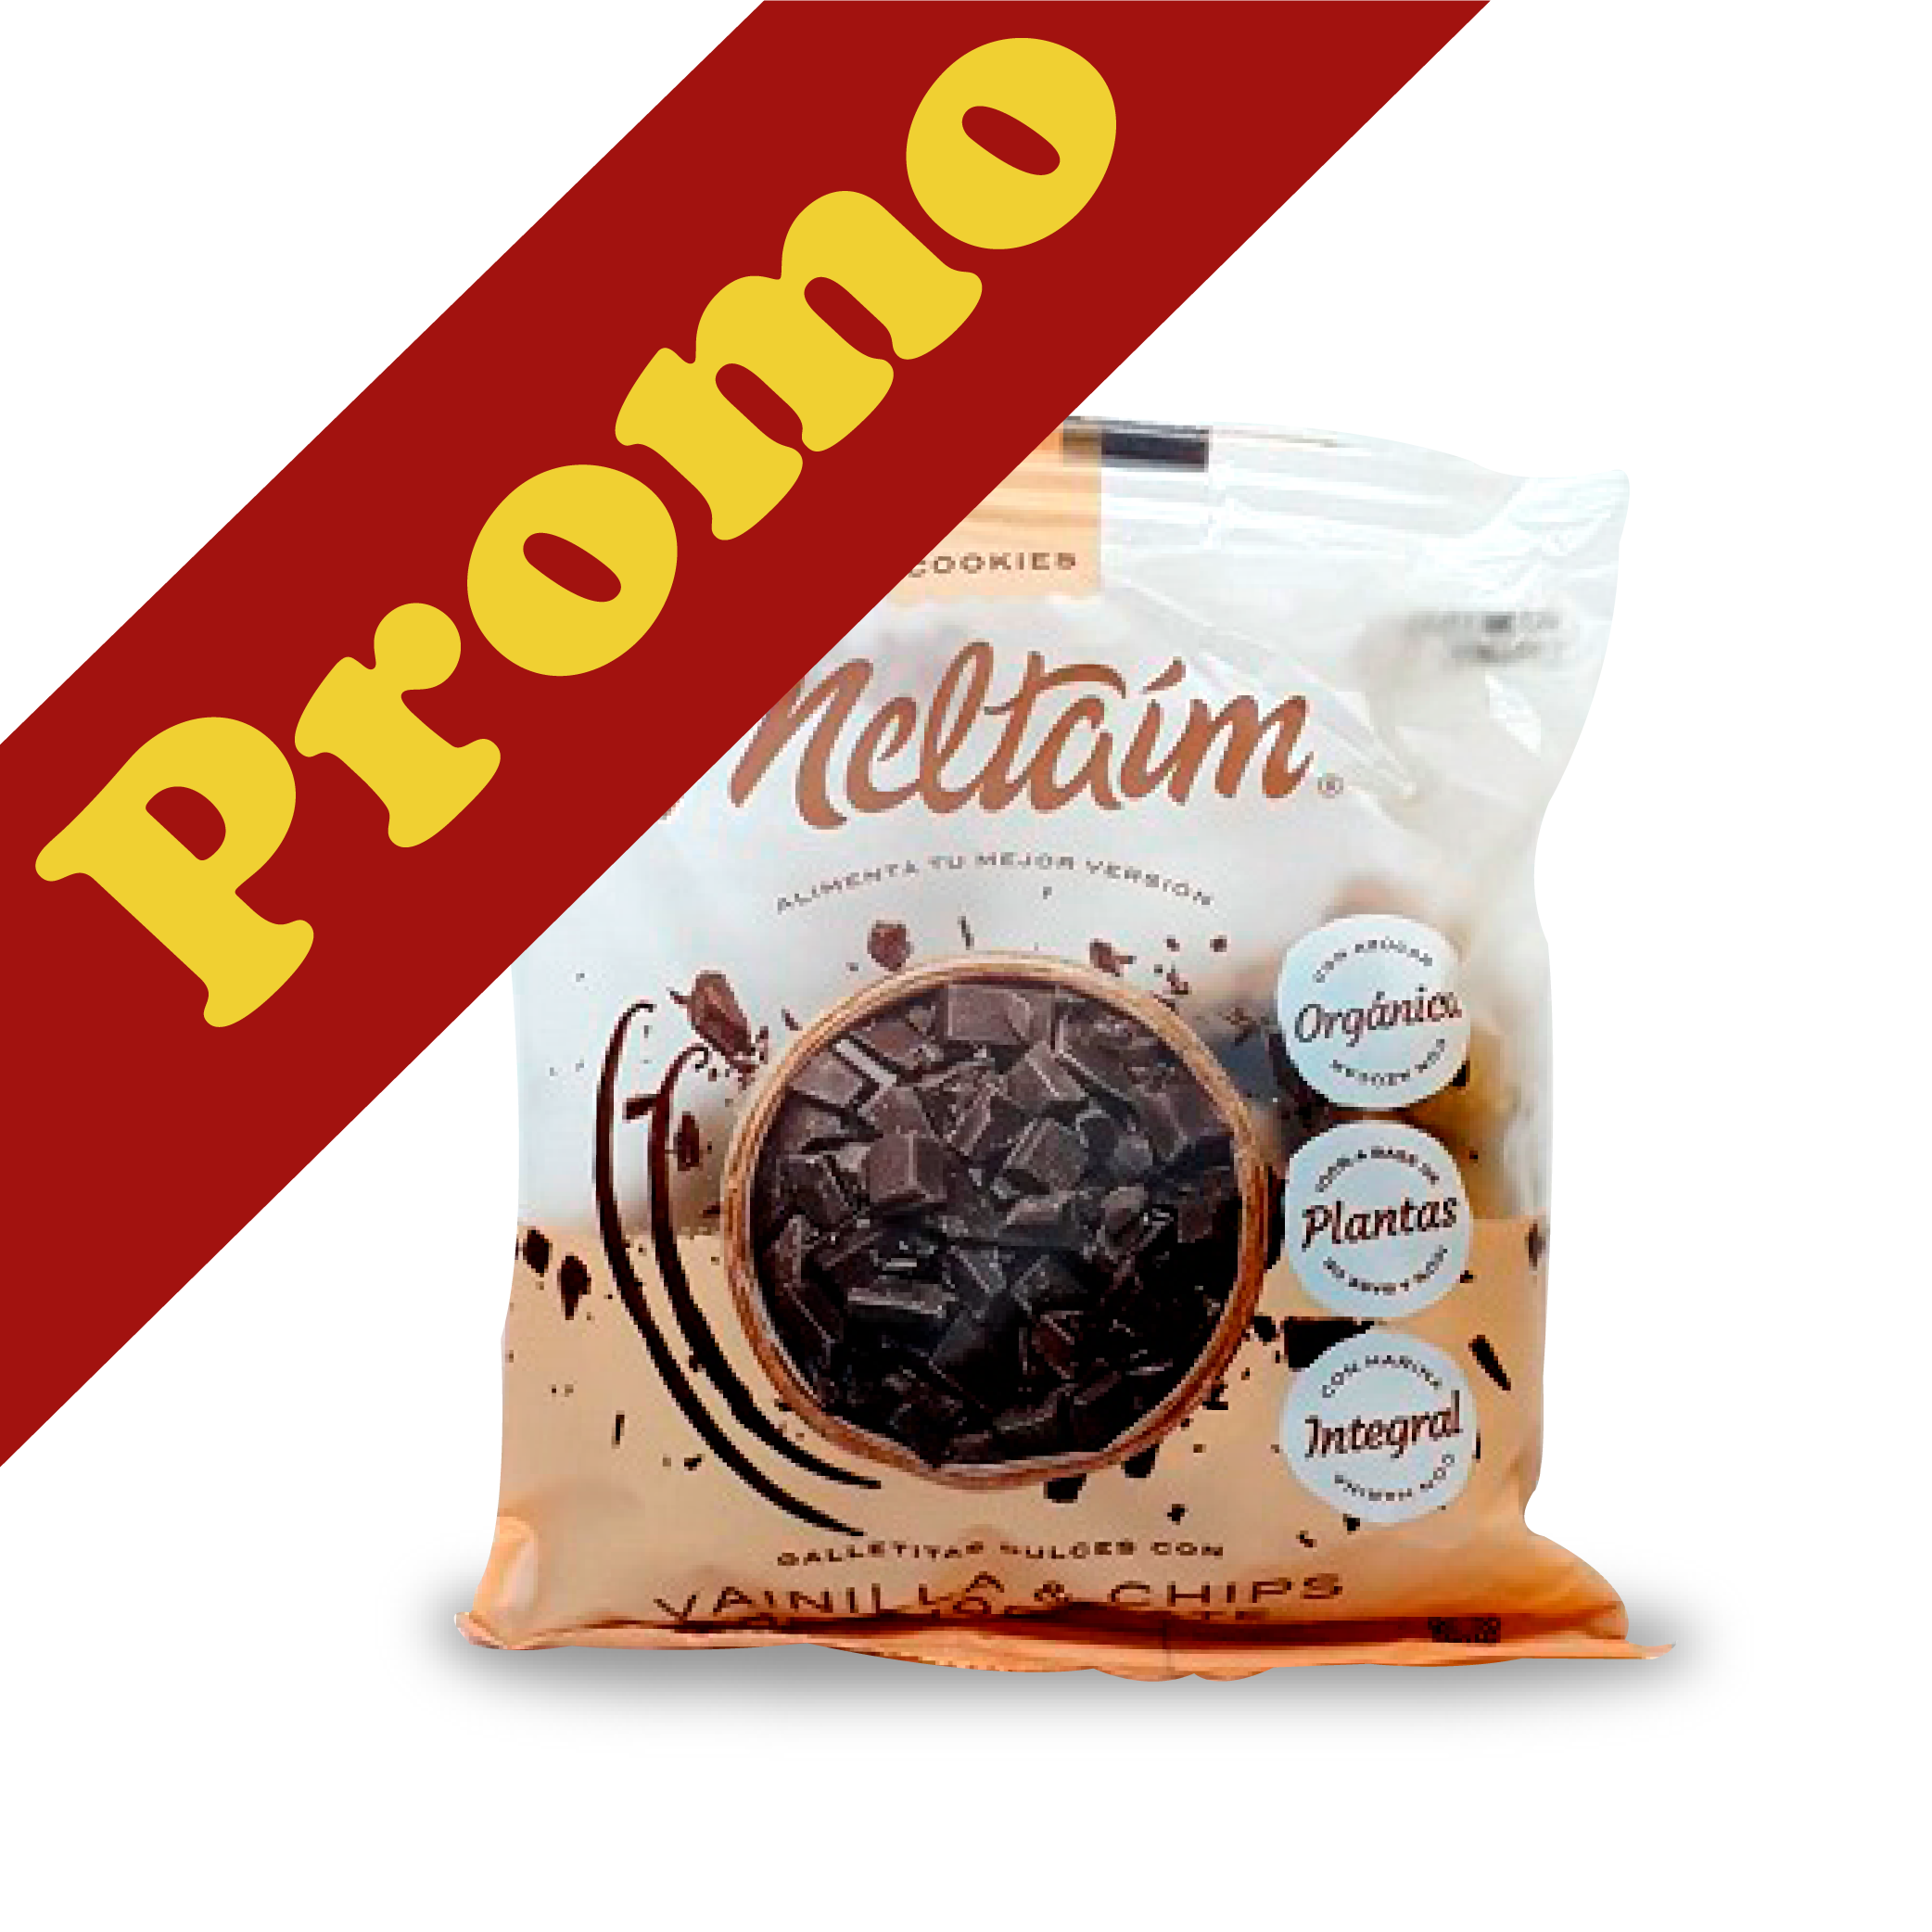 Meltaim - Cookies vainilla x chips  PROMO 4 x 150 gr